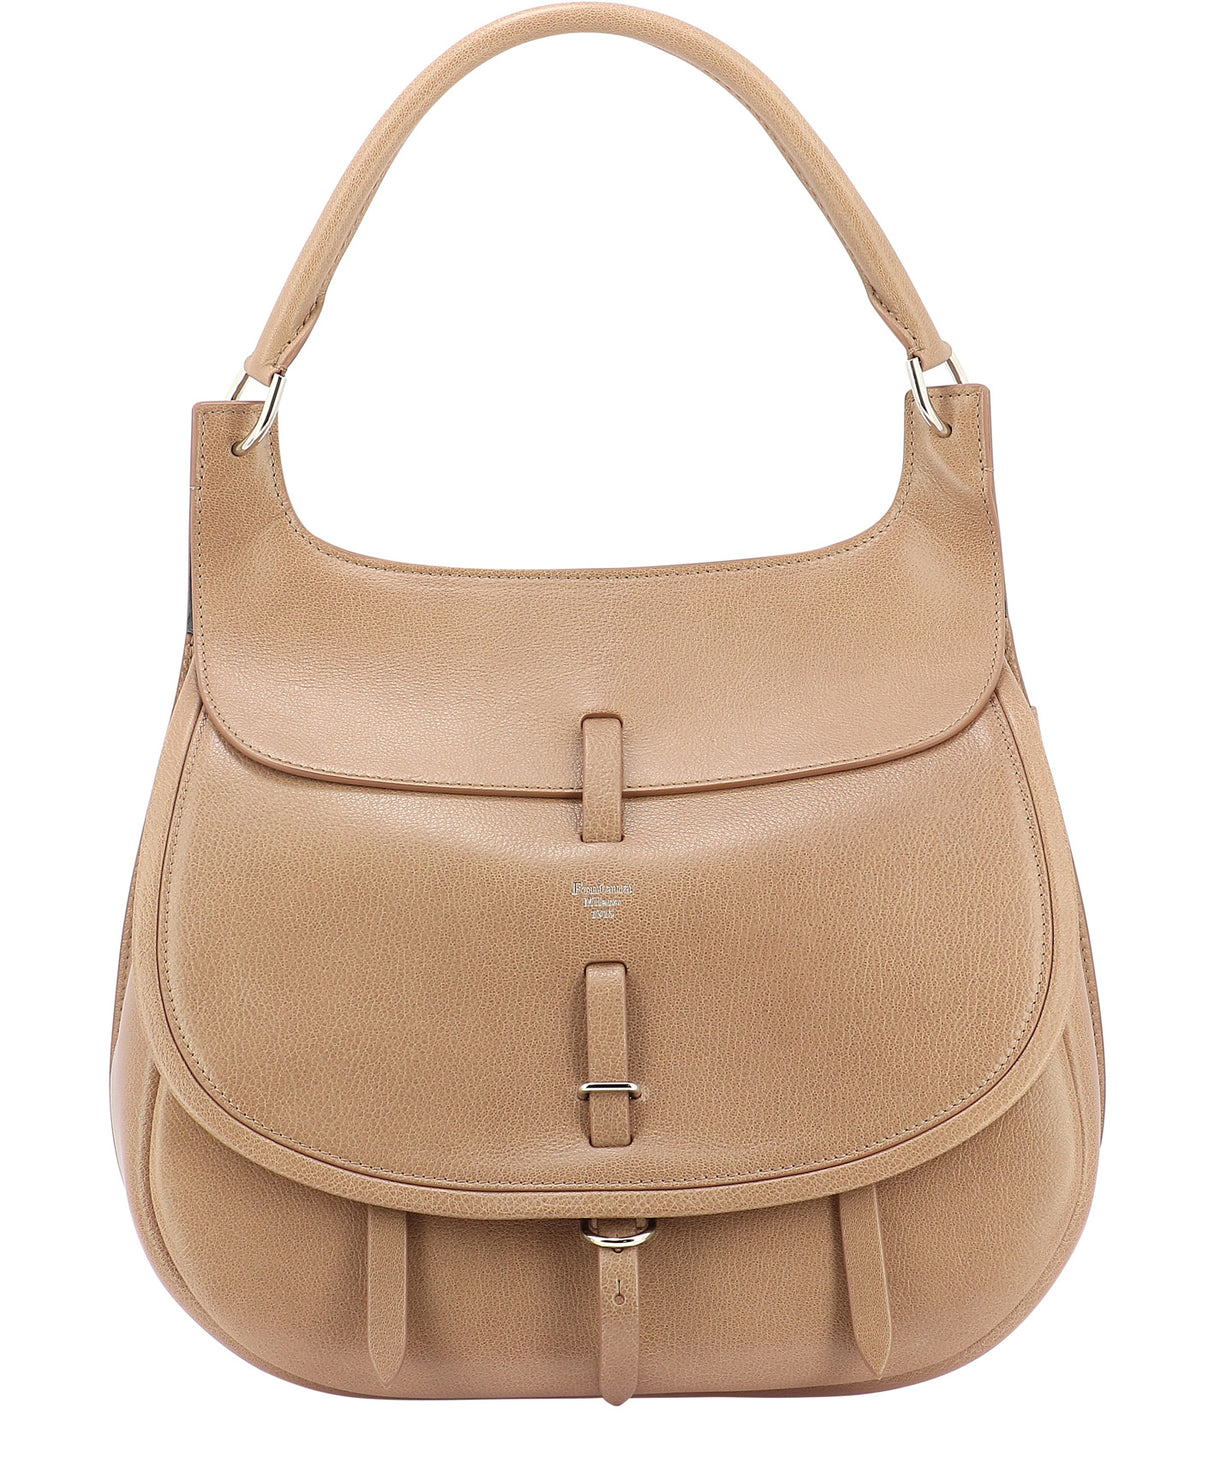 FONTANA MILANO 1915 Stylish Brown Shoulder Handbag for Women with No Shoulder Strap